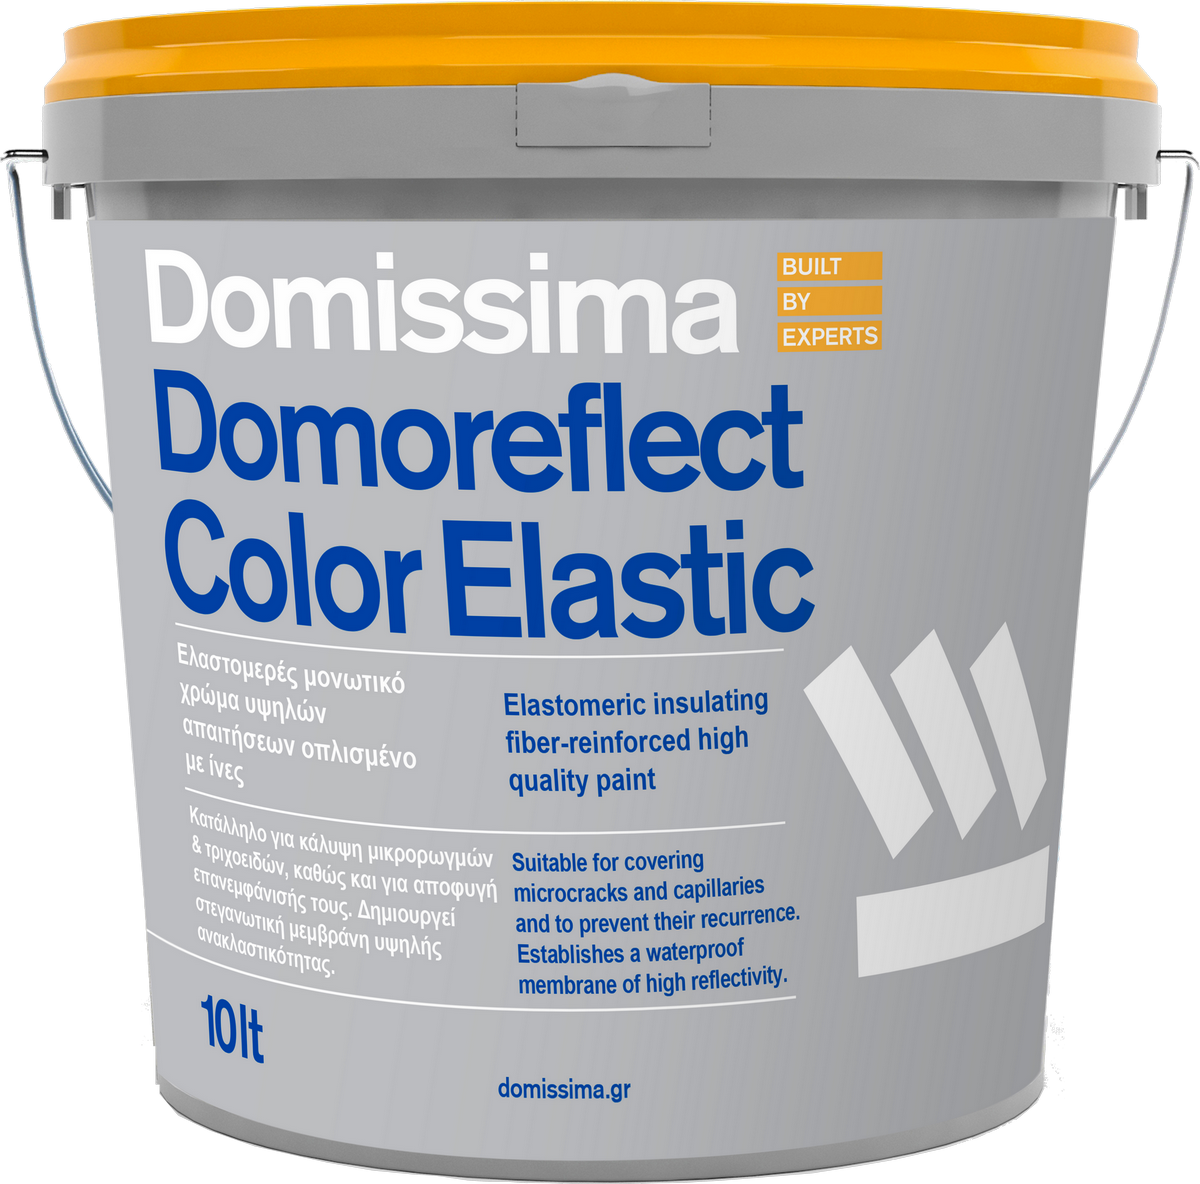 Domoreflect Color Elastic